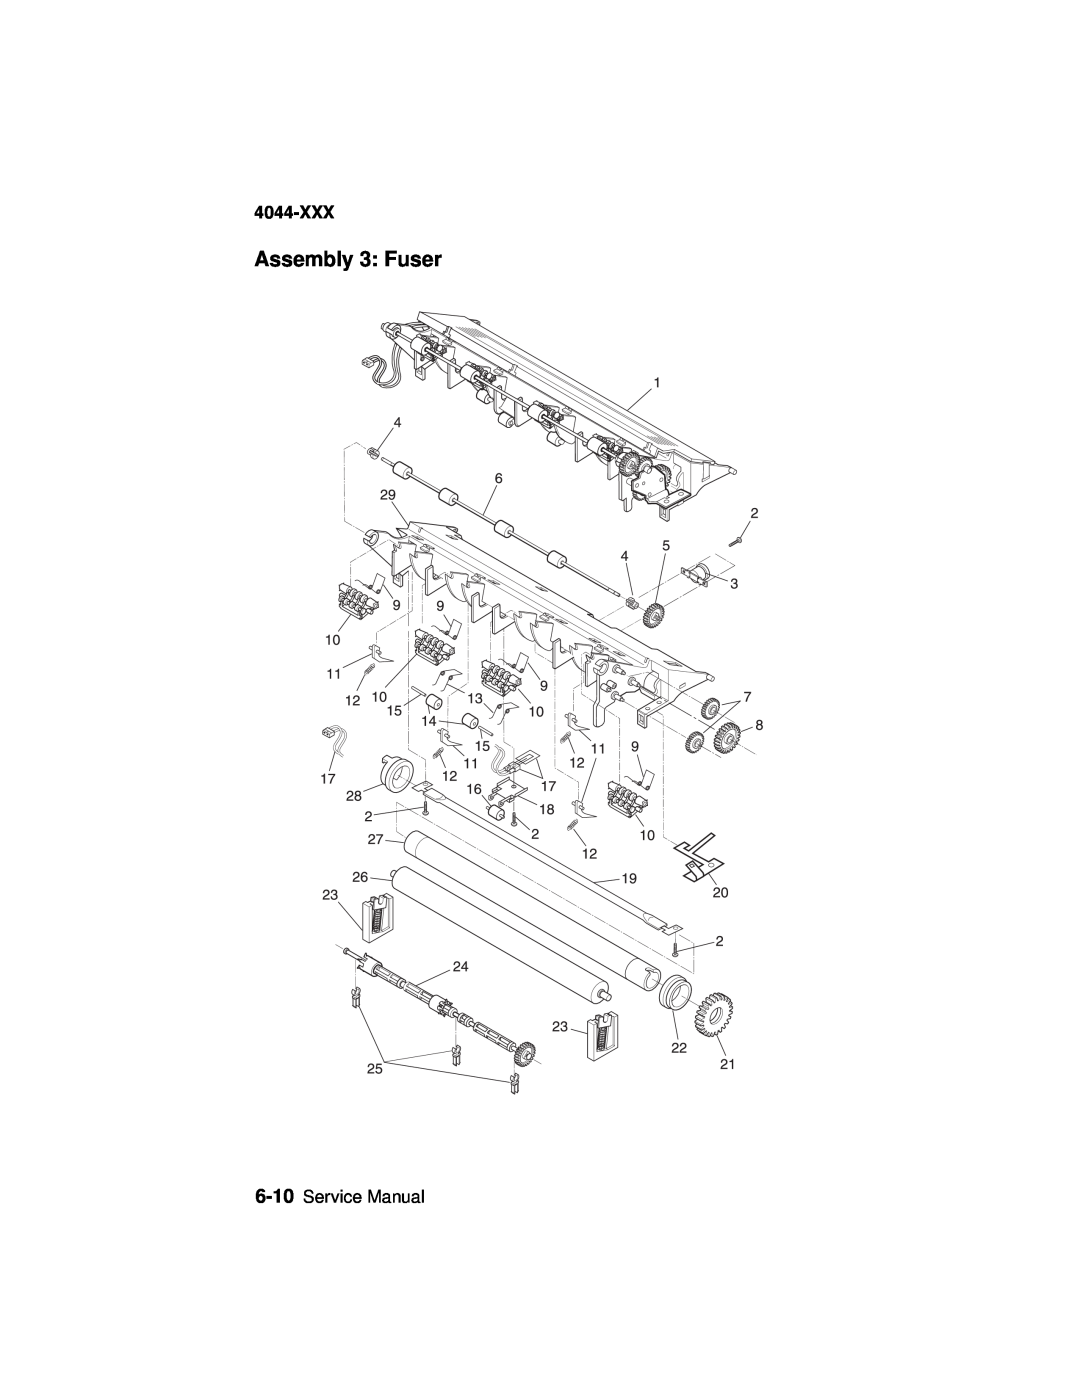 Lexmark 4044-XXX, E310 manual Assembly 3: Fuser, Service Manual 